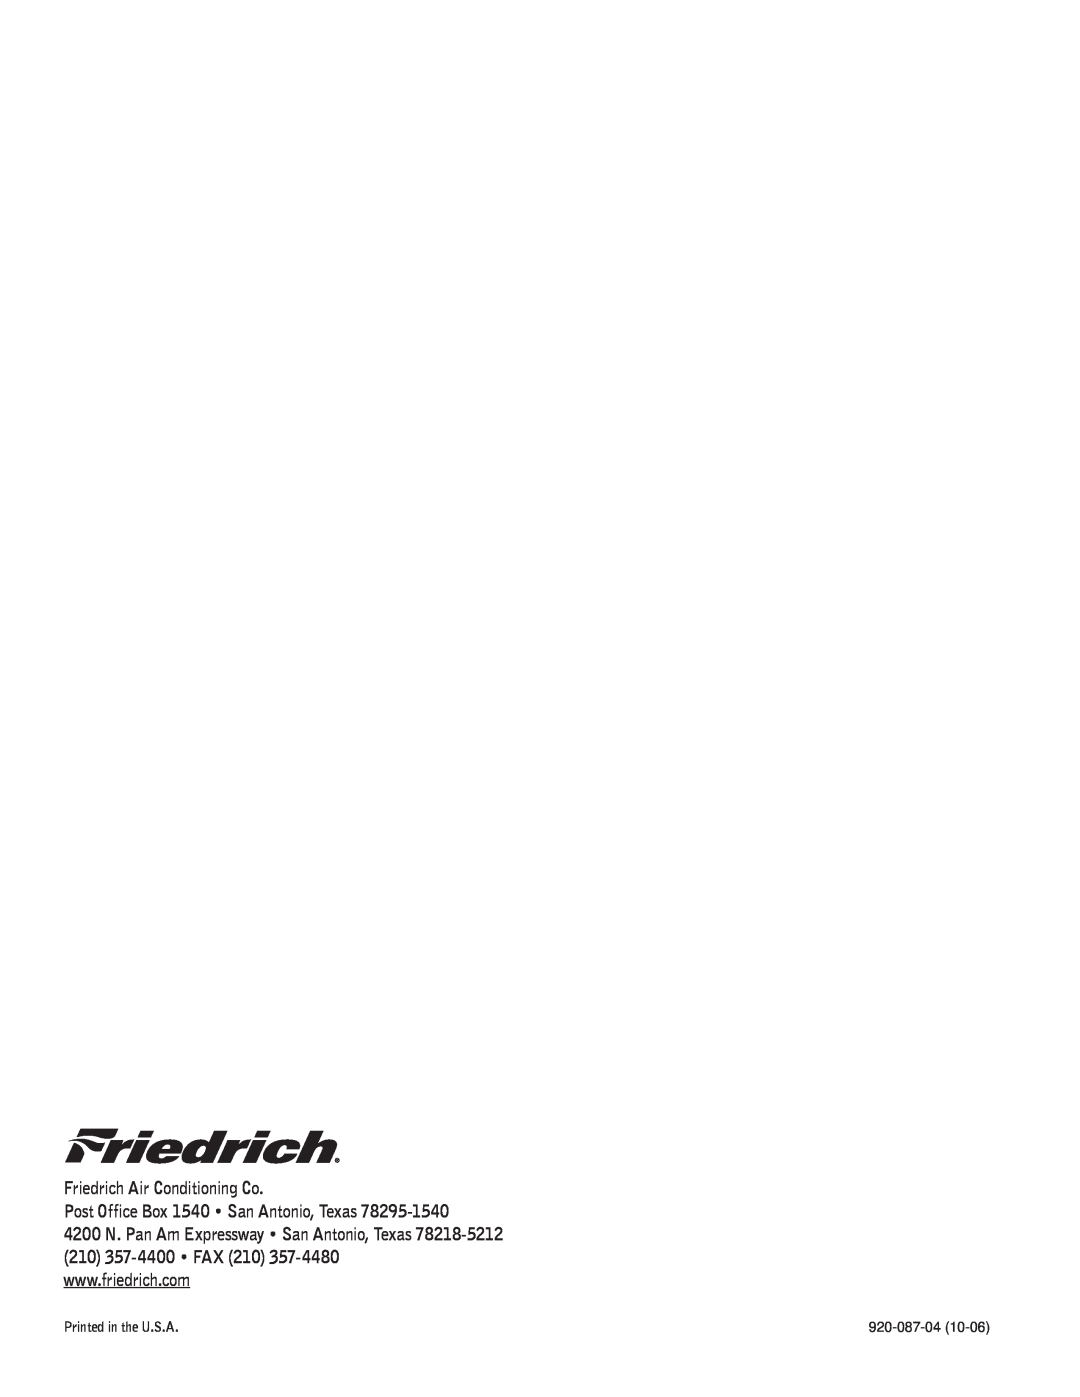 Friedrich HEAT PUMPS manual Friedrich Air Conditioning Co, Post Office Box 1540 San Antonio, Texas 